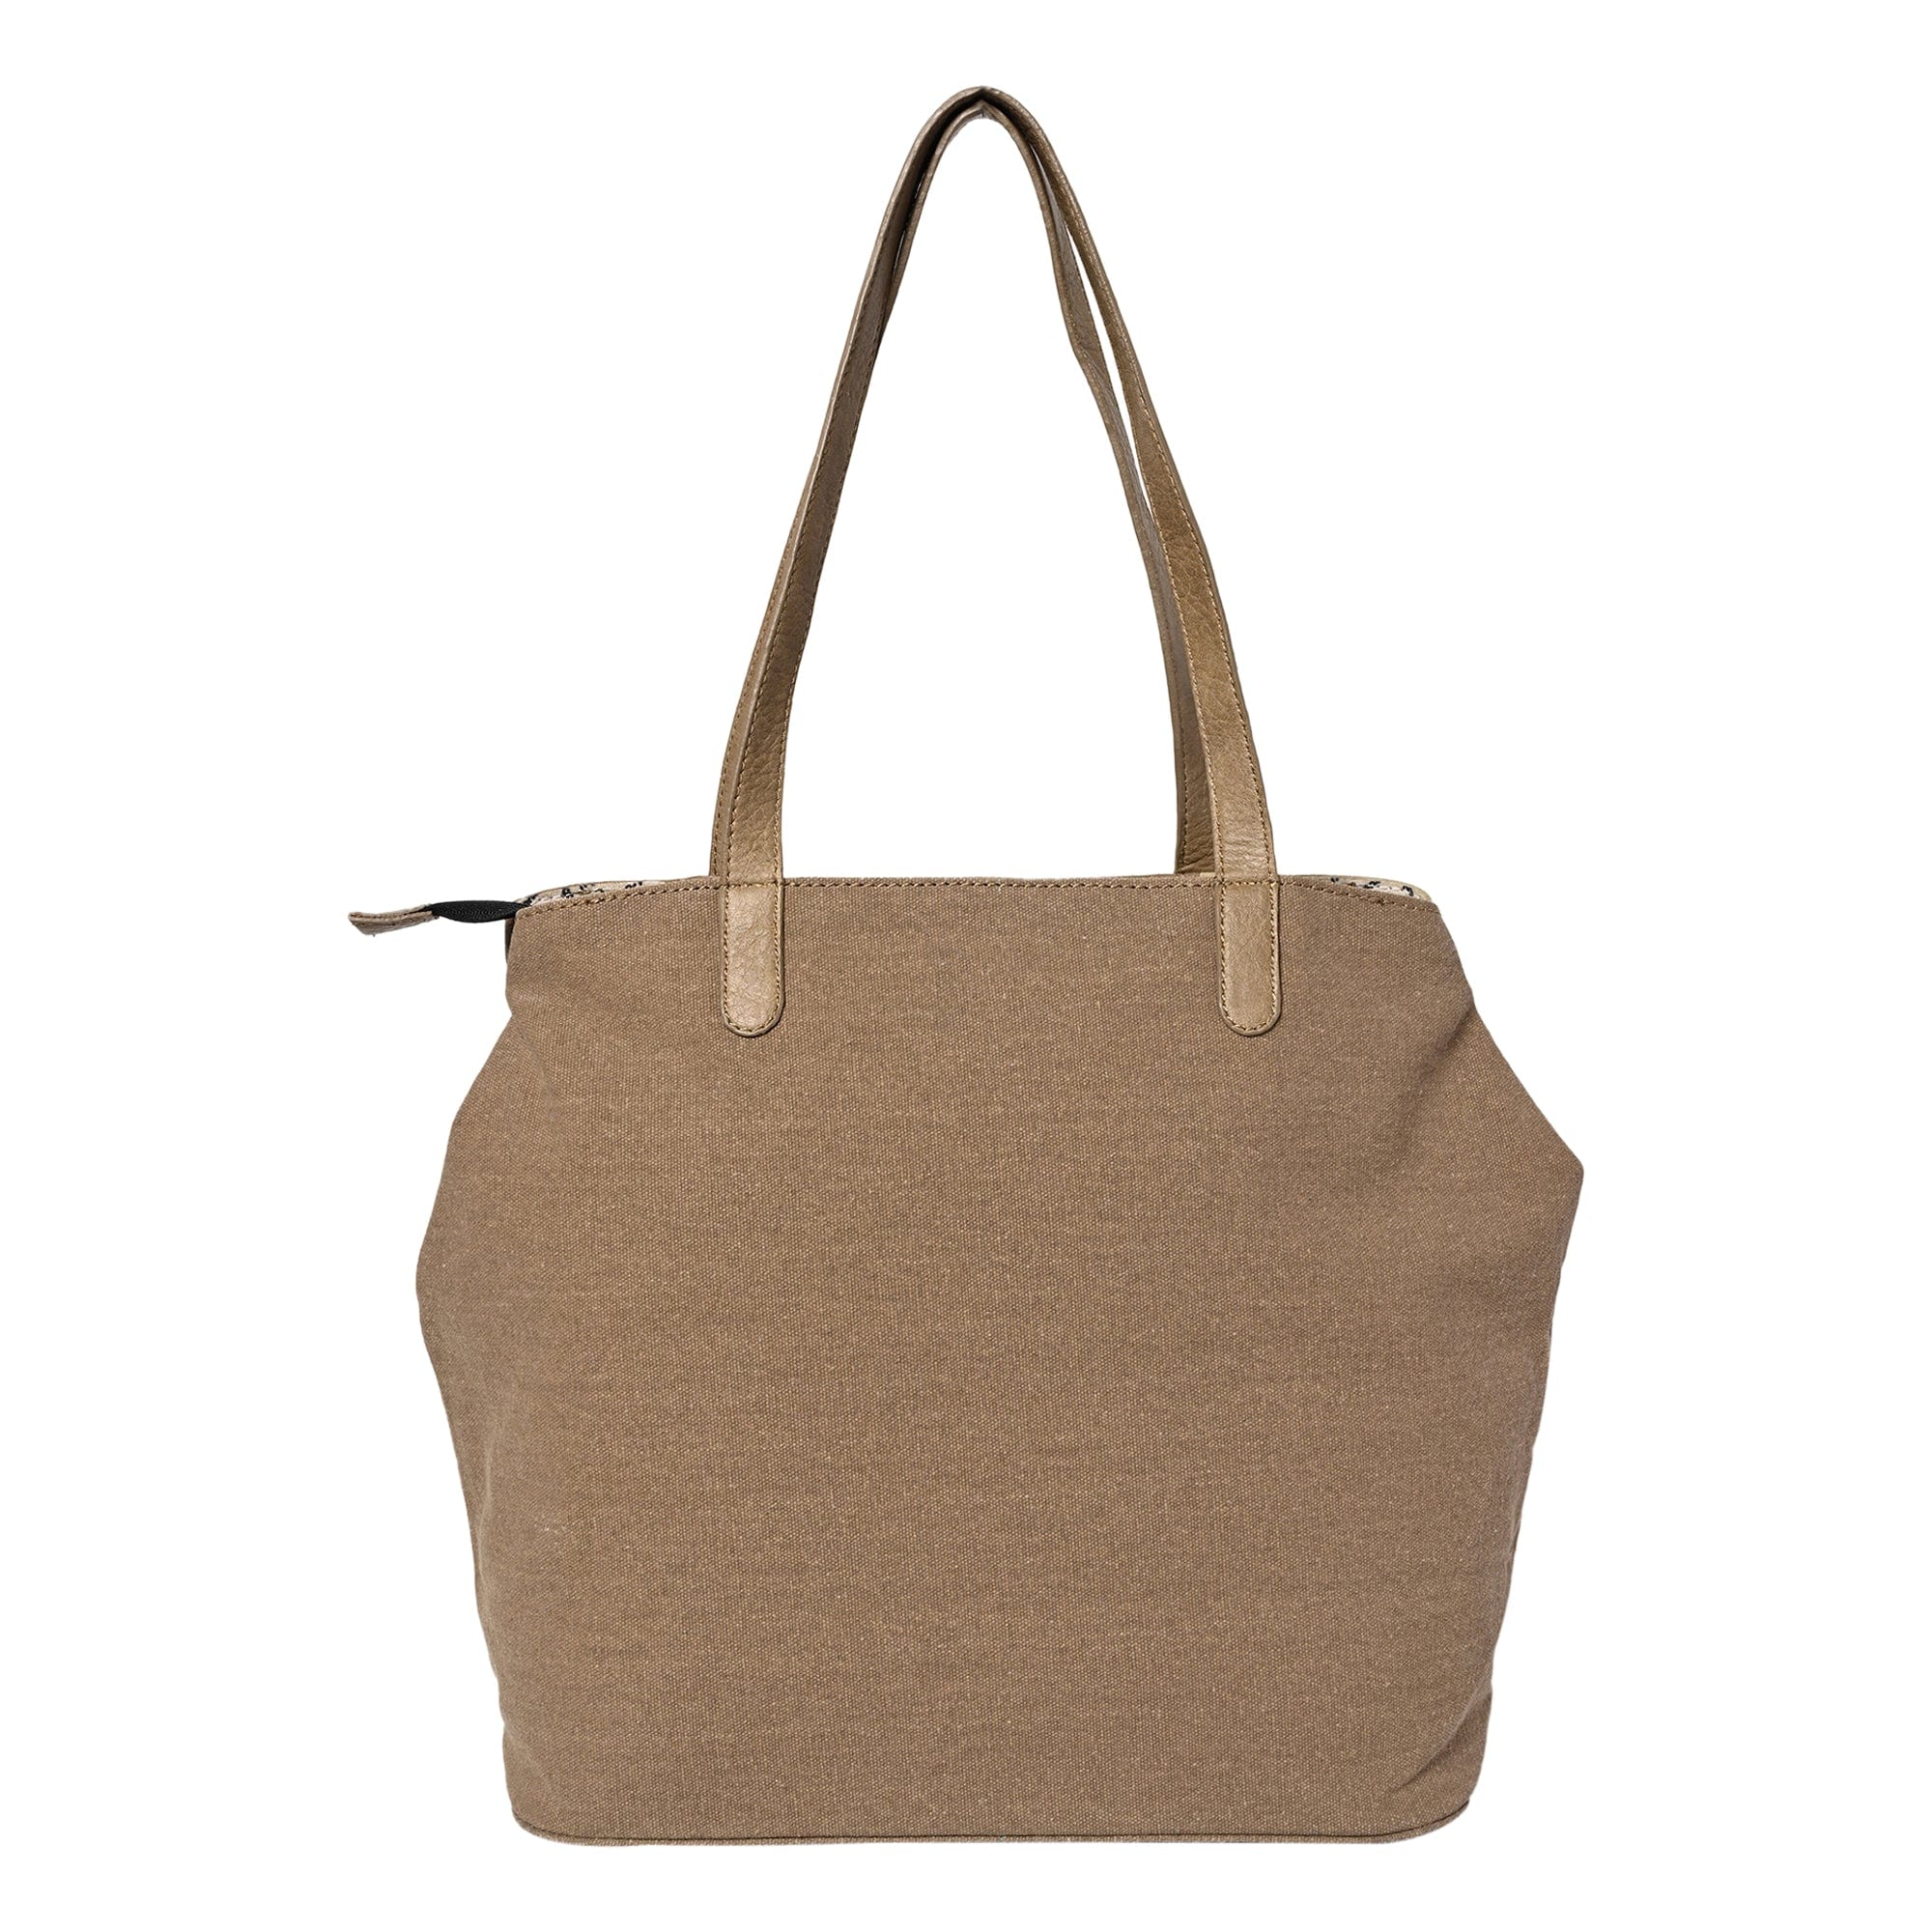 Mona B Mischa Tote: Olive - (M-2505) - Handbag by Mona-B - 